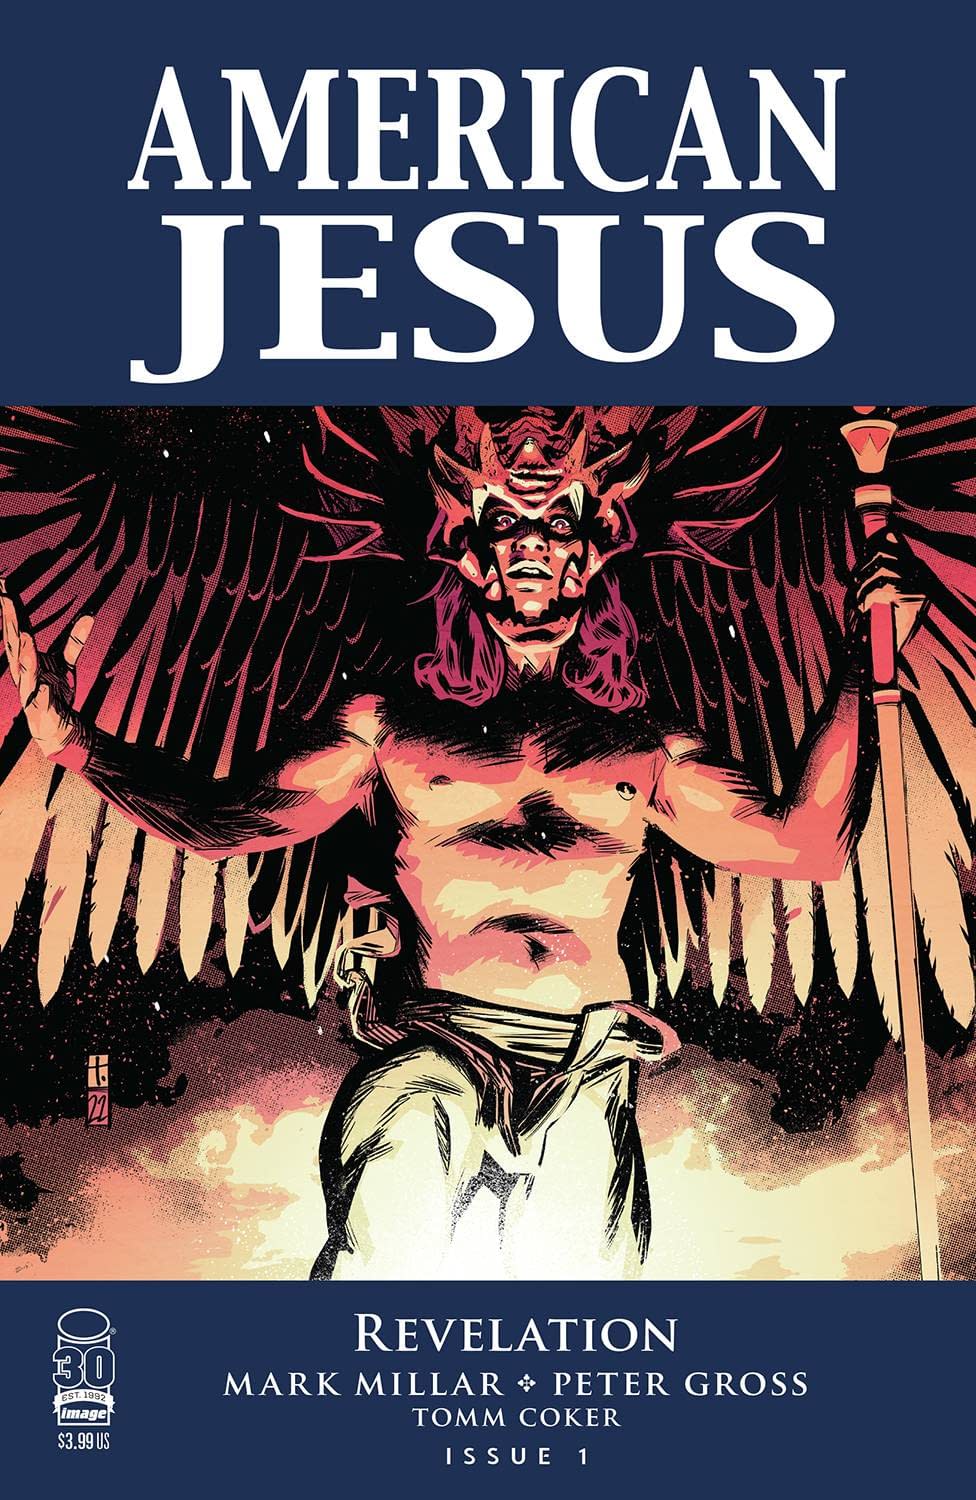 1659413120 882 Image Comics Announces American Jesus Mark Millar Trilogy Conclusion October